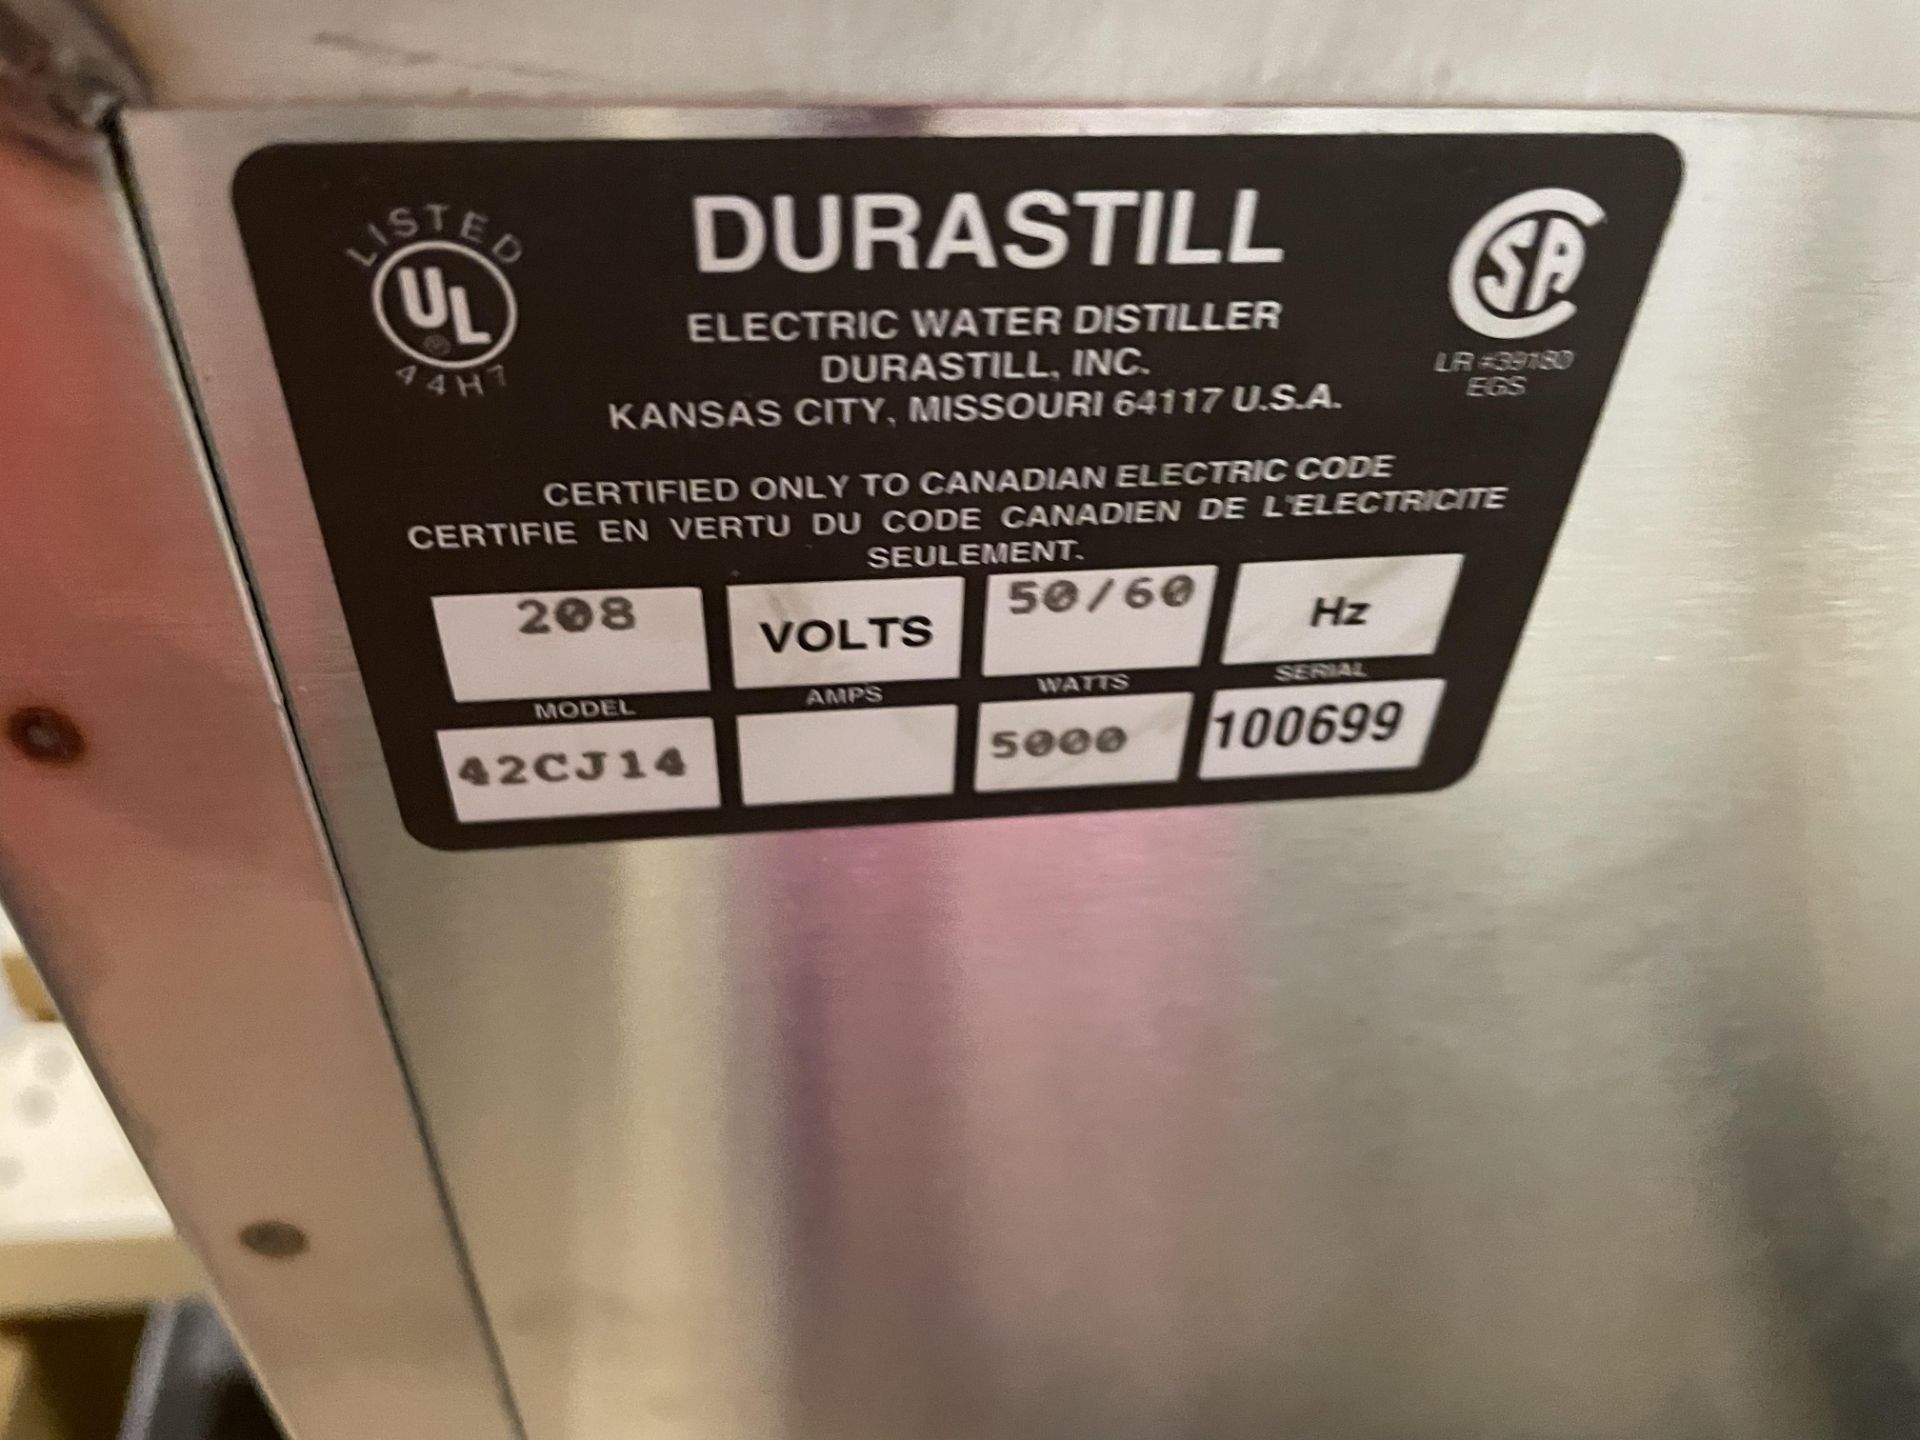 Reliance Dishwasher Model 400 XLS S/N 3627214009 With Durastill Water Distiller Model 42CJ14 S/N Loa - Image 11 of 11